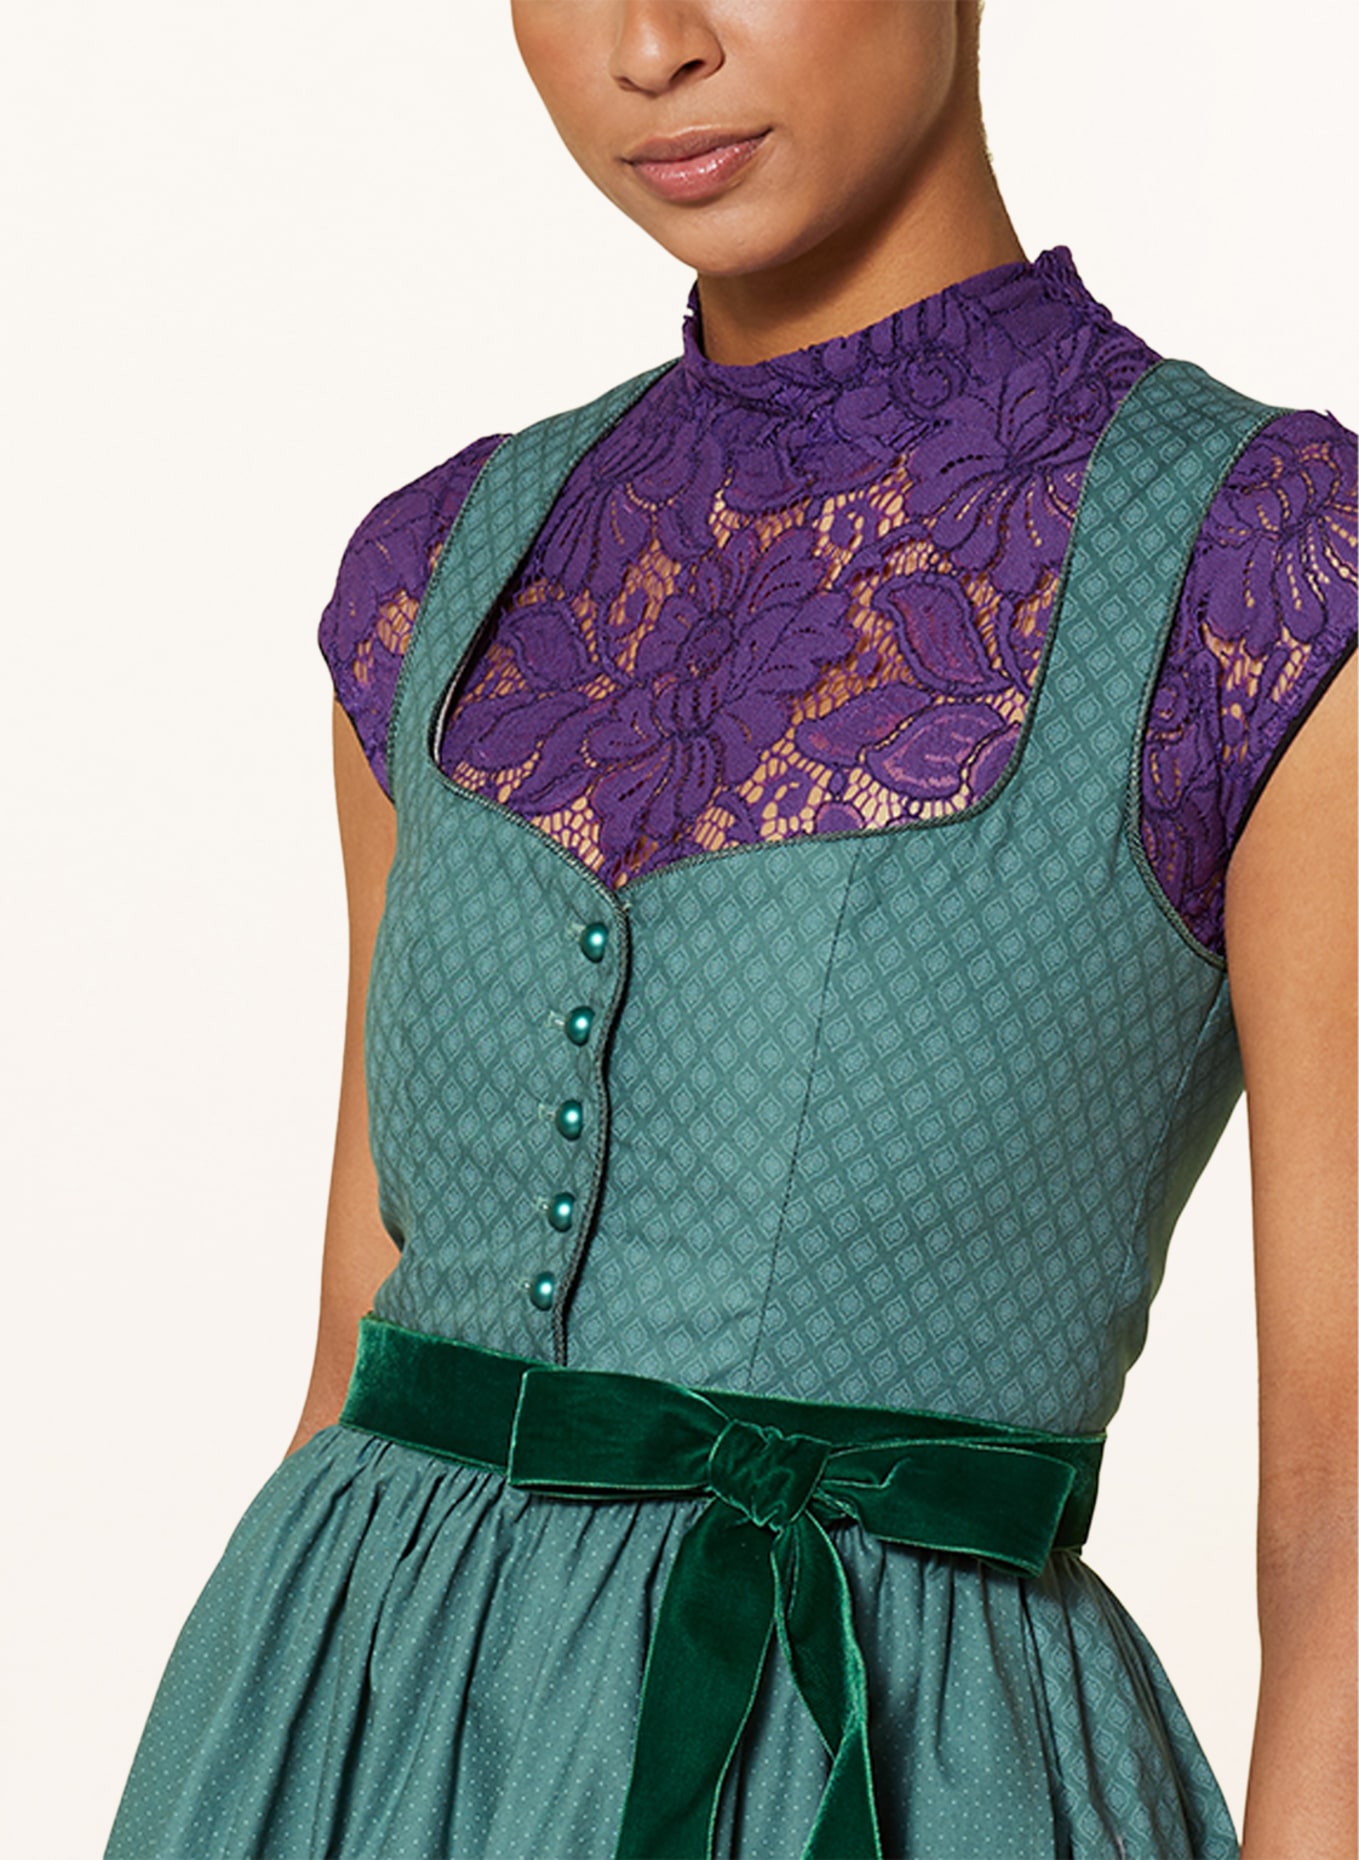 KINGA MATHE Trachten blouse CHARLOTTE made of lace, Color: PURPLE (Image 3)